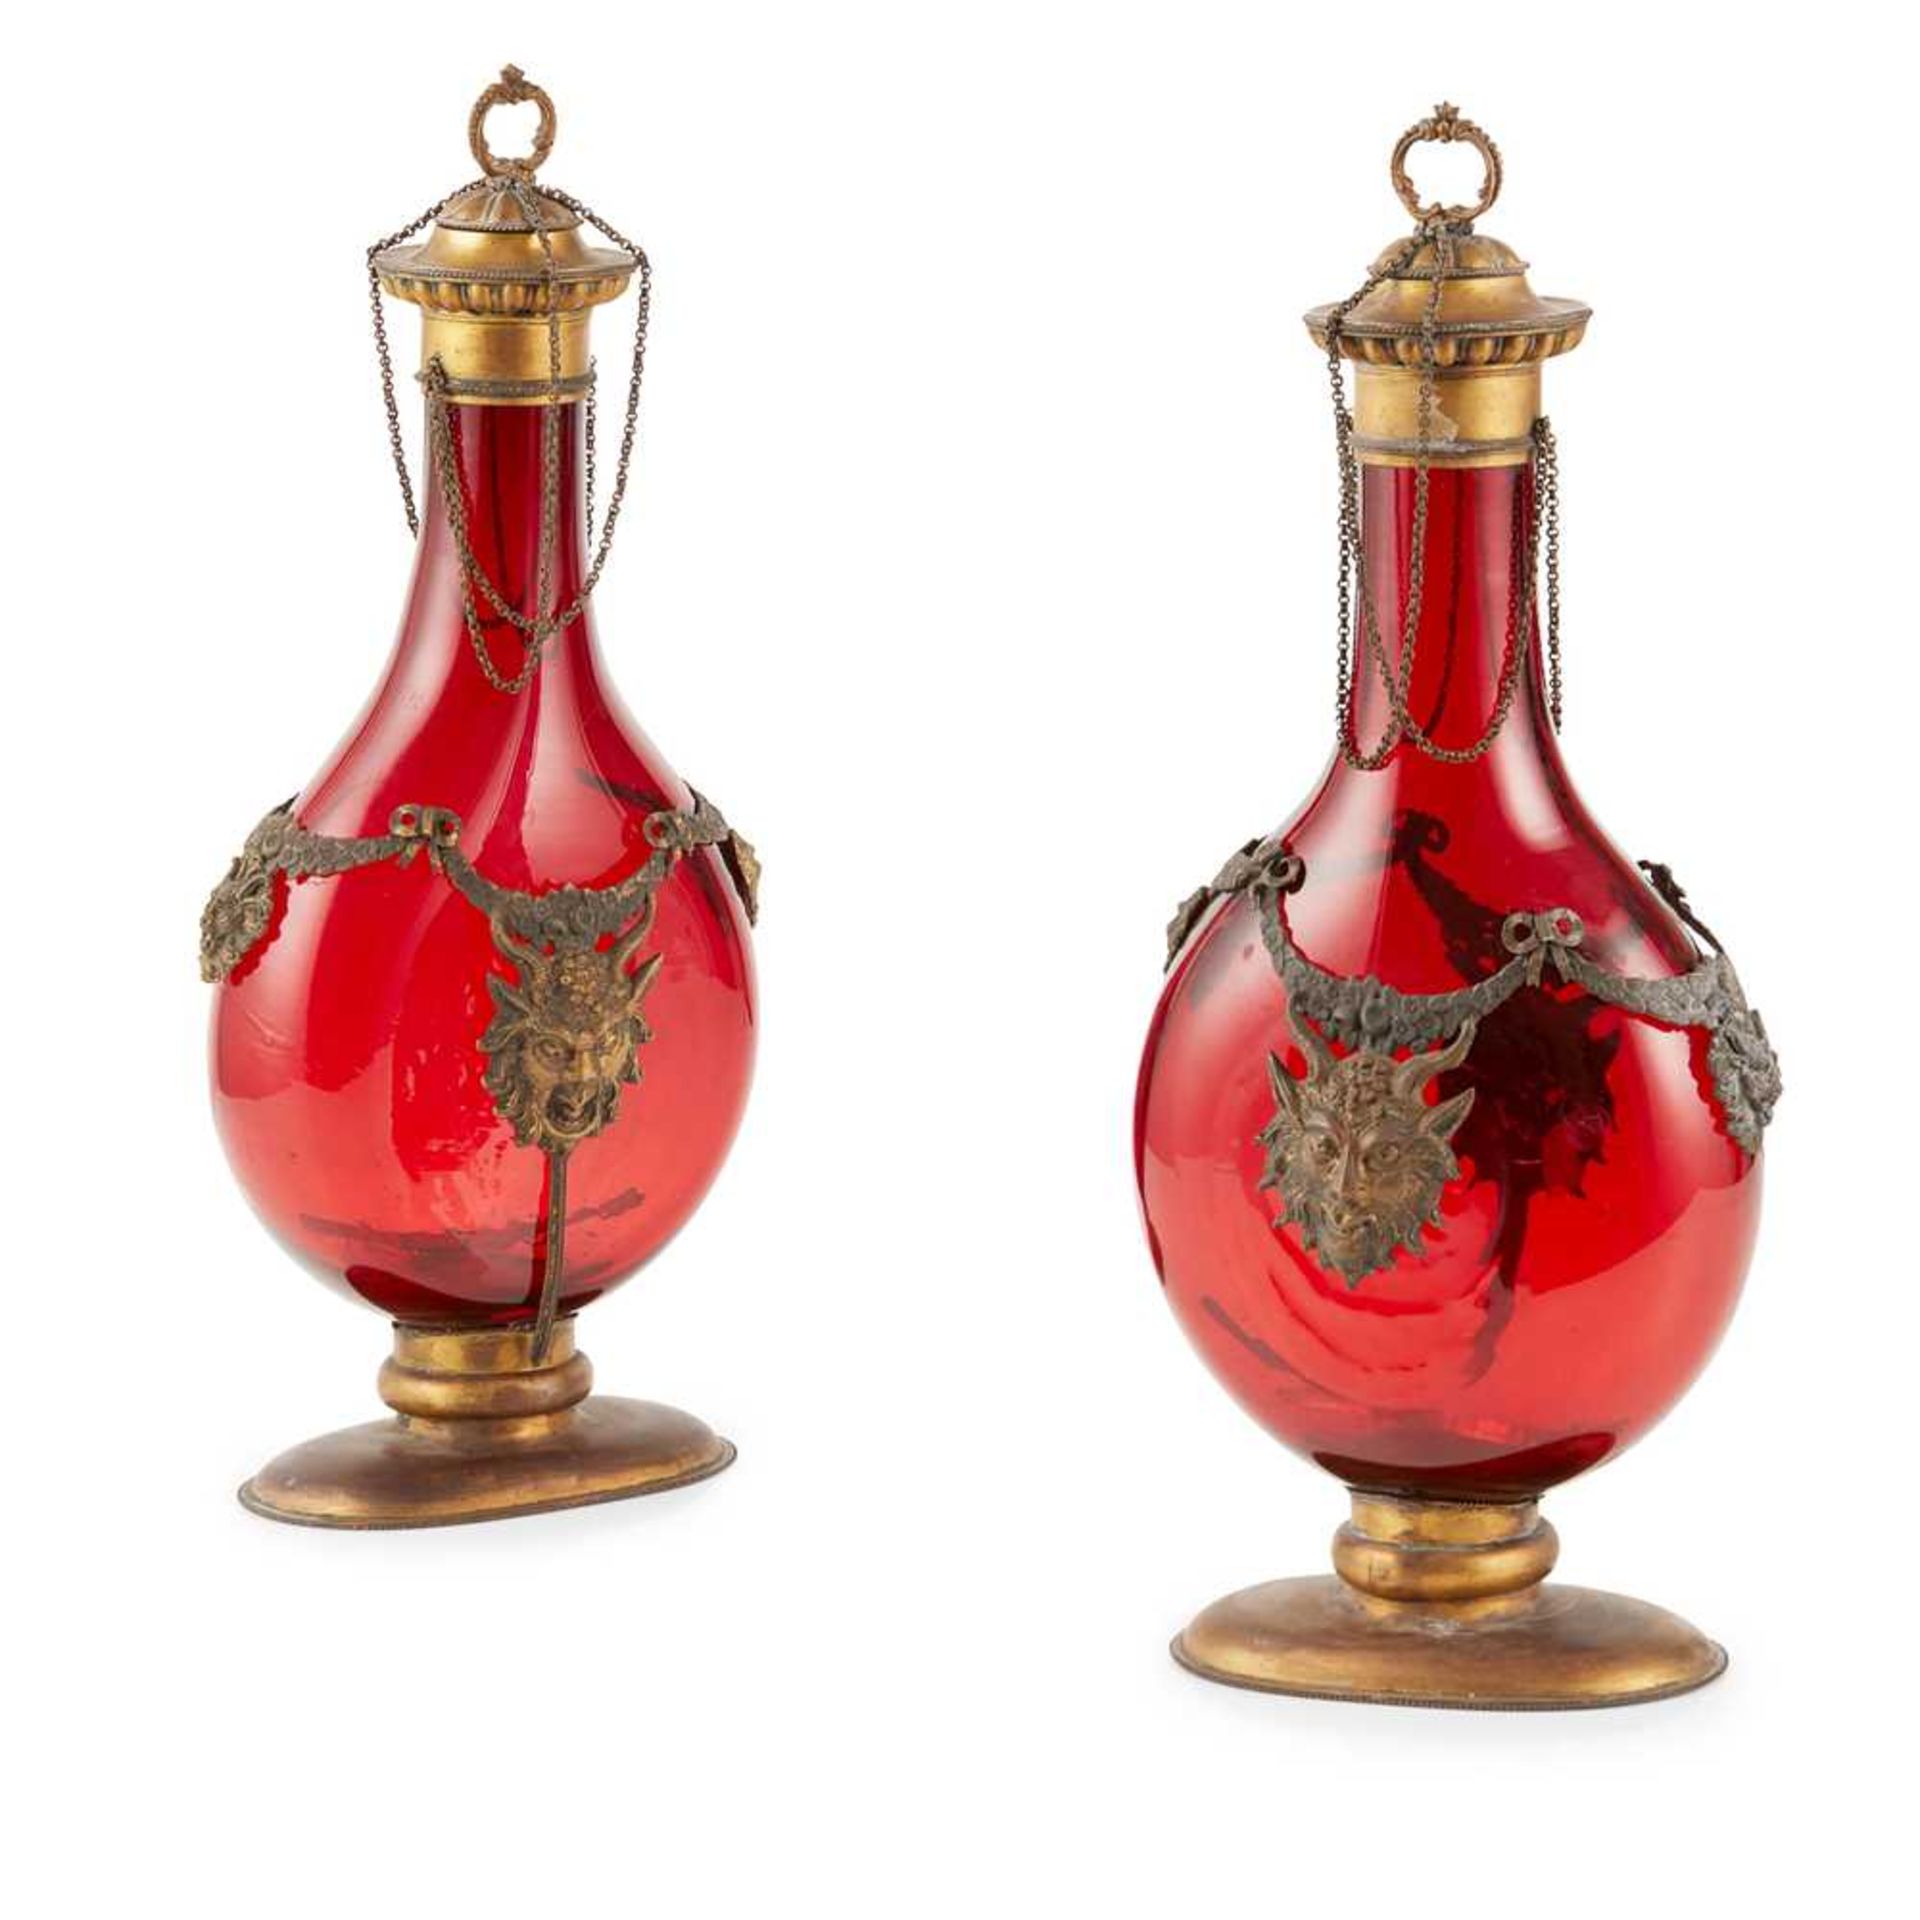 PAIR OF GERMAN RUBY GLASS GILT METAL MOUNTED PILGRIM FLASKS 19TH CENTURY